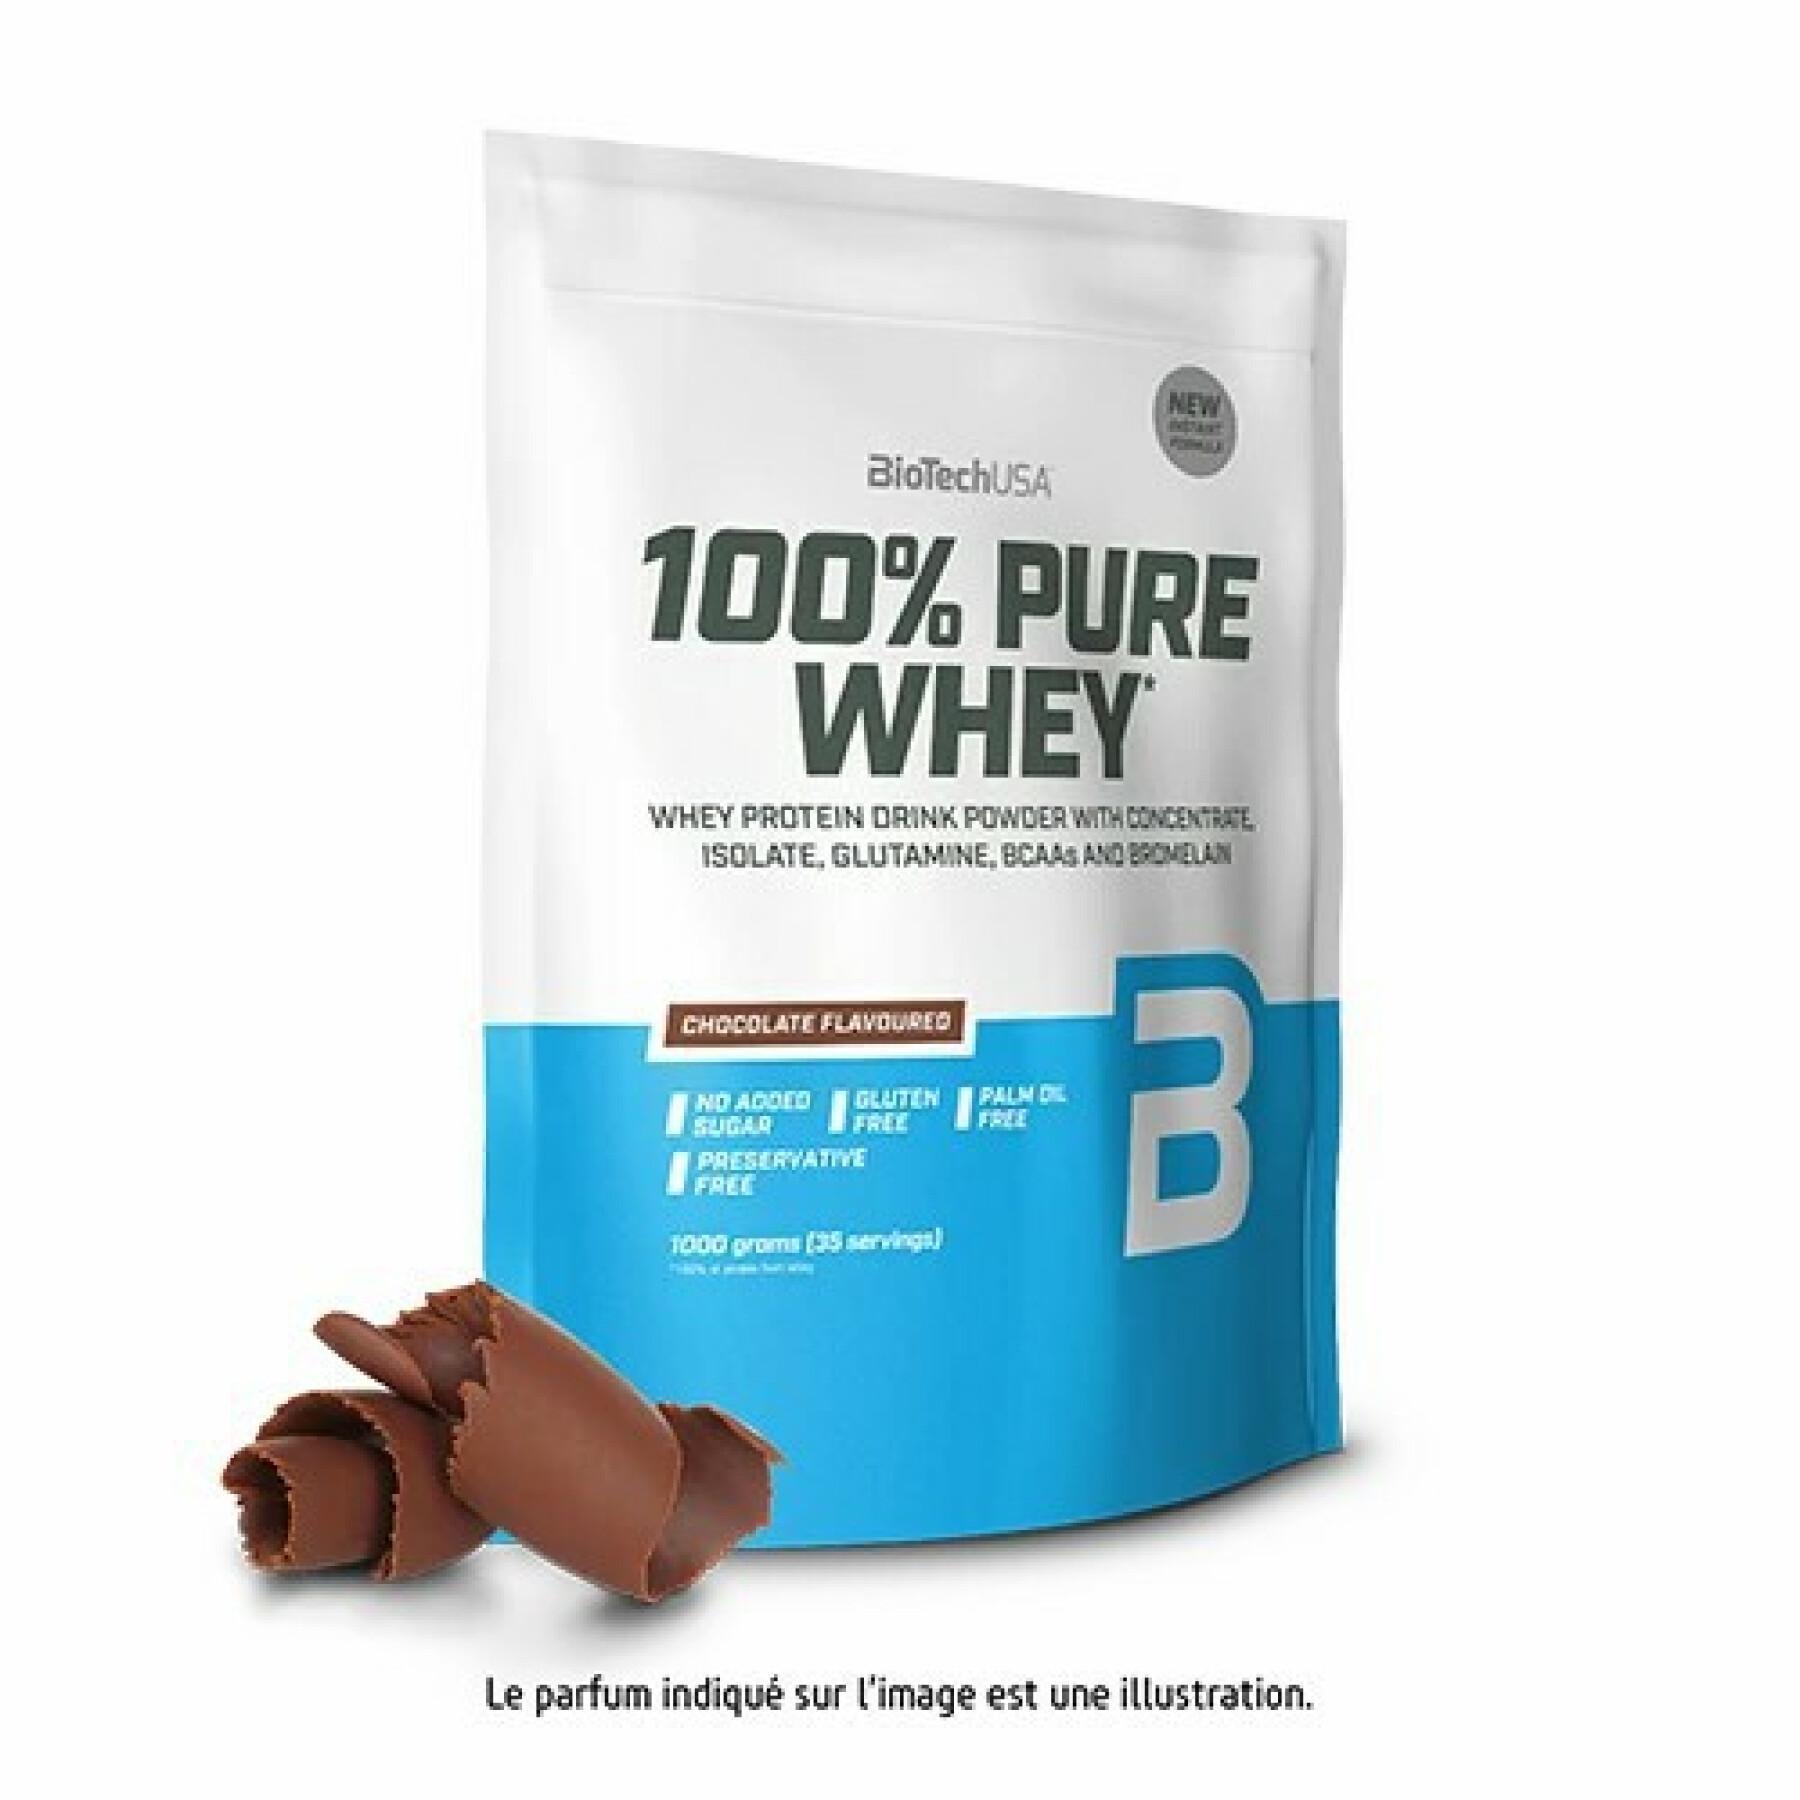 Pak van 10 zakken 100% zuivere wei-eiwitten Biotech USA - Chocolate - 1kg